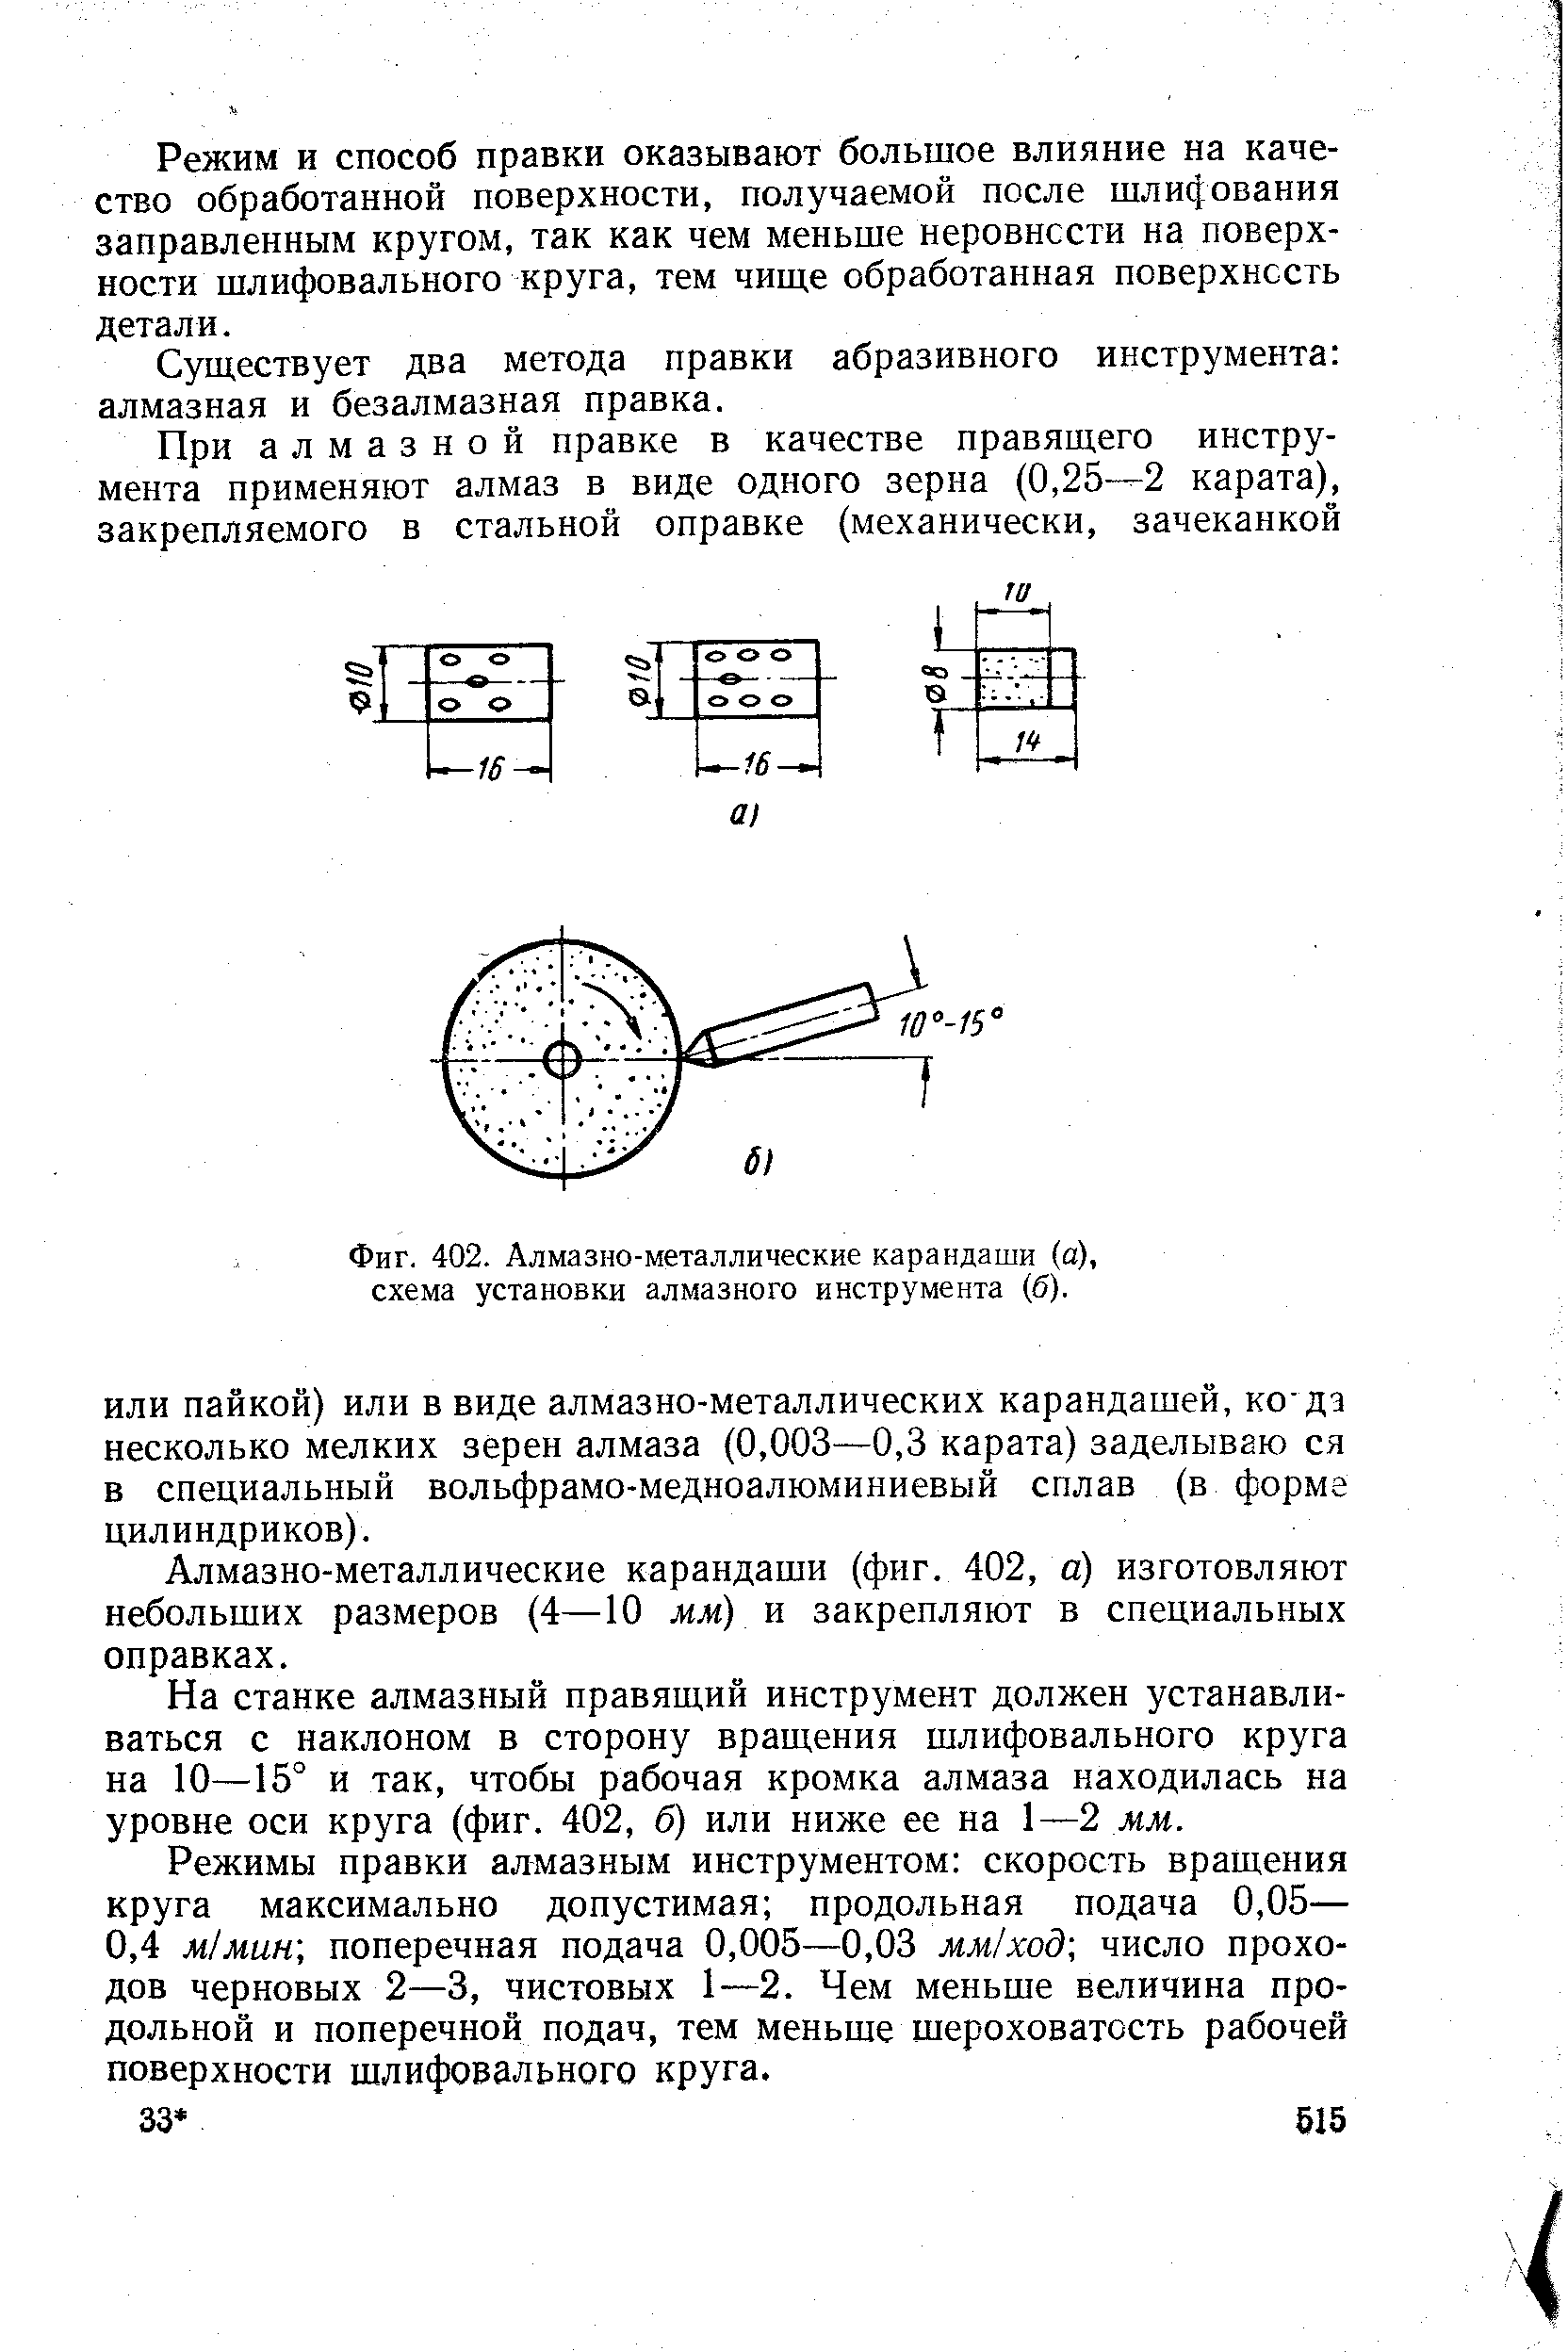 Фиг. 402. <a href="/info/90698">Алмазно-металлические карандаши</a> (а), схема установки алмазного инструмента (б).
